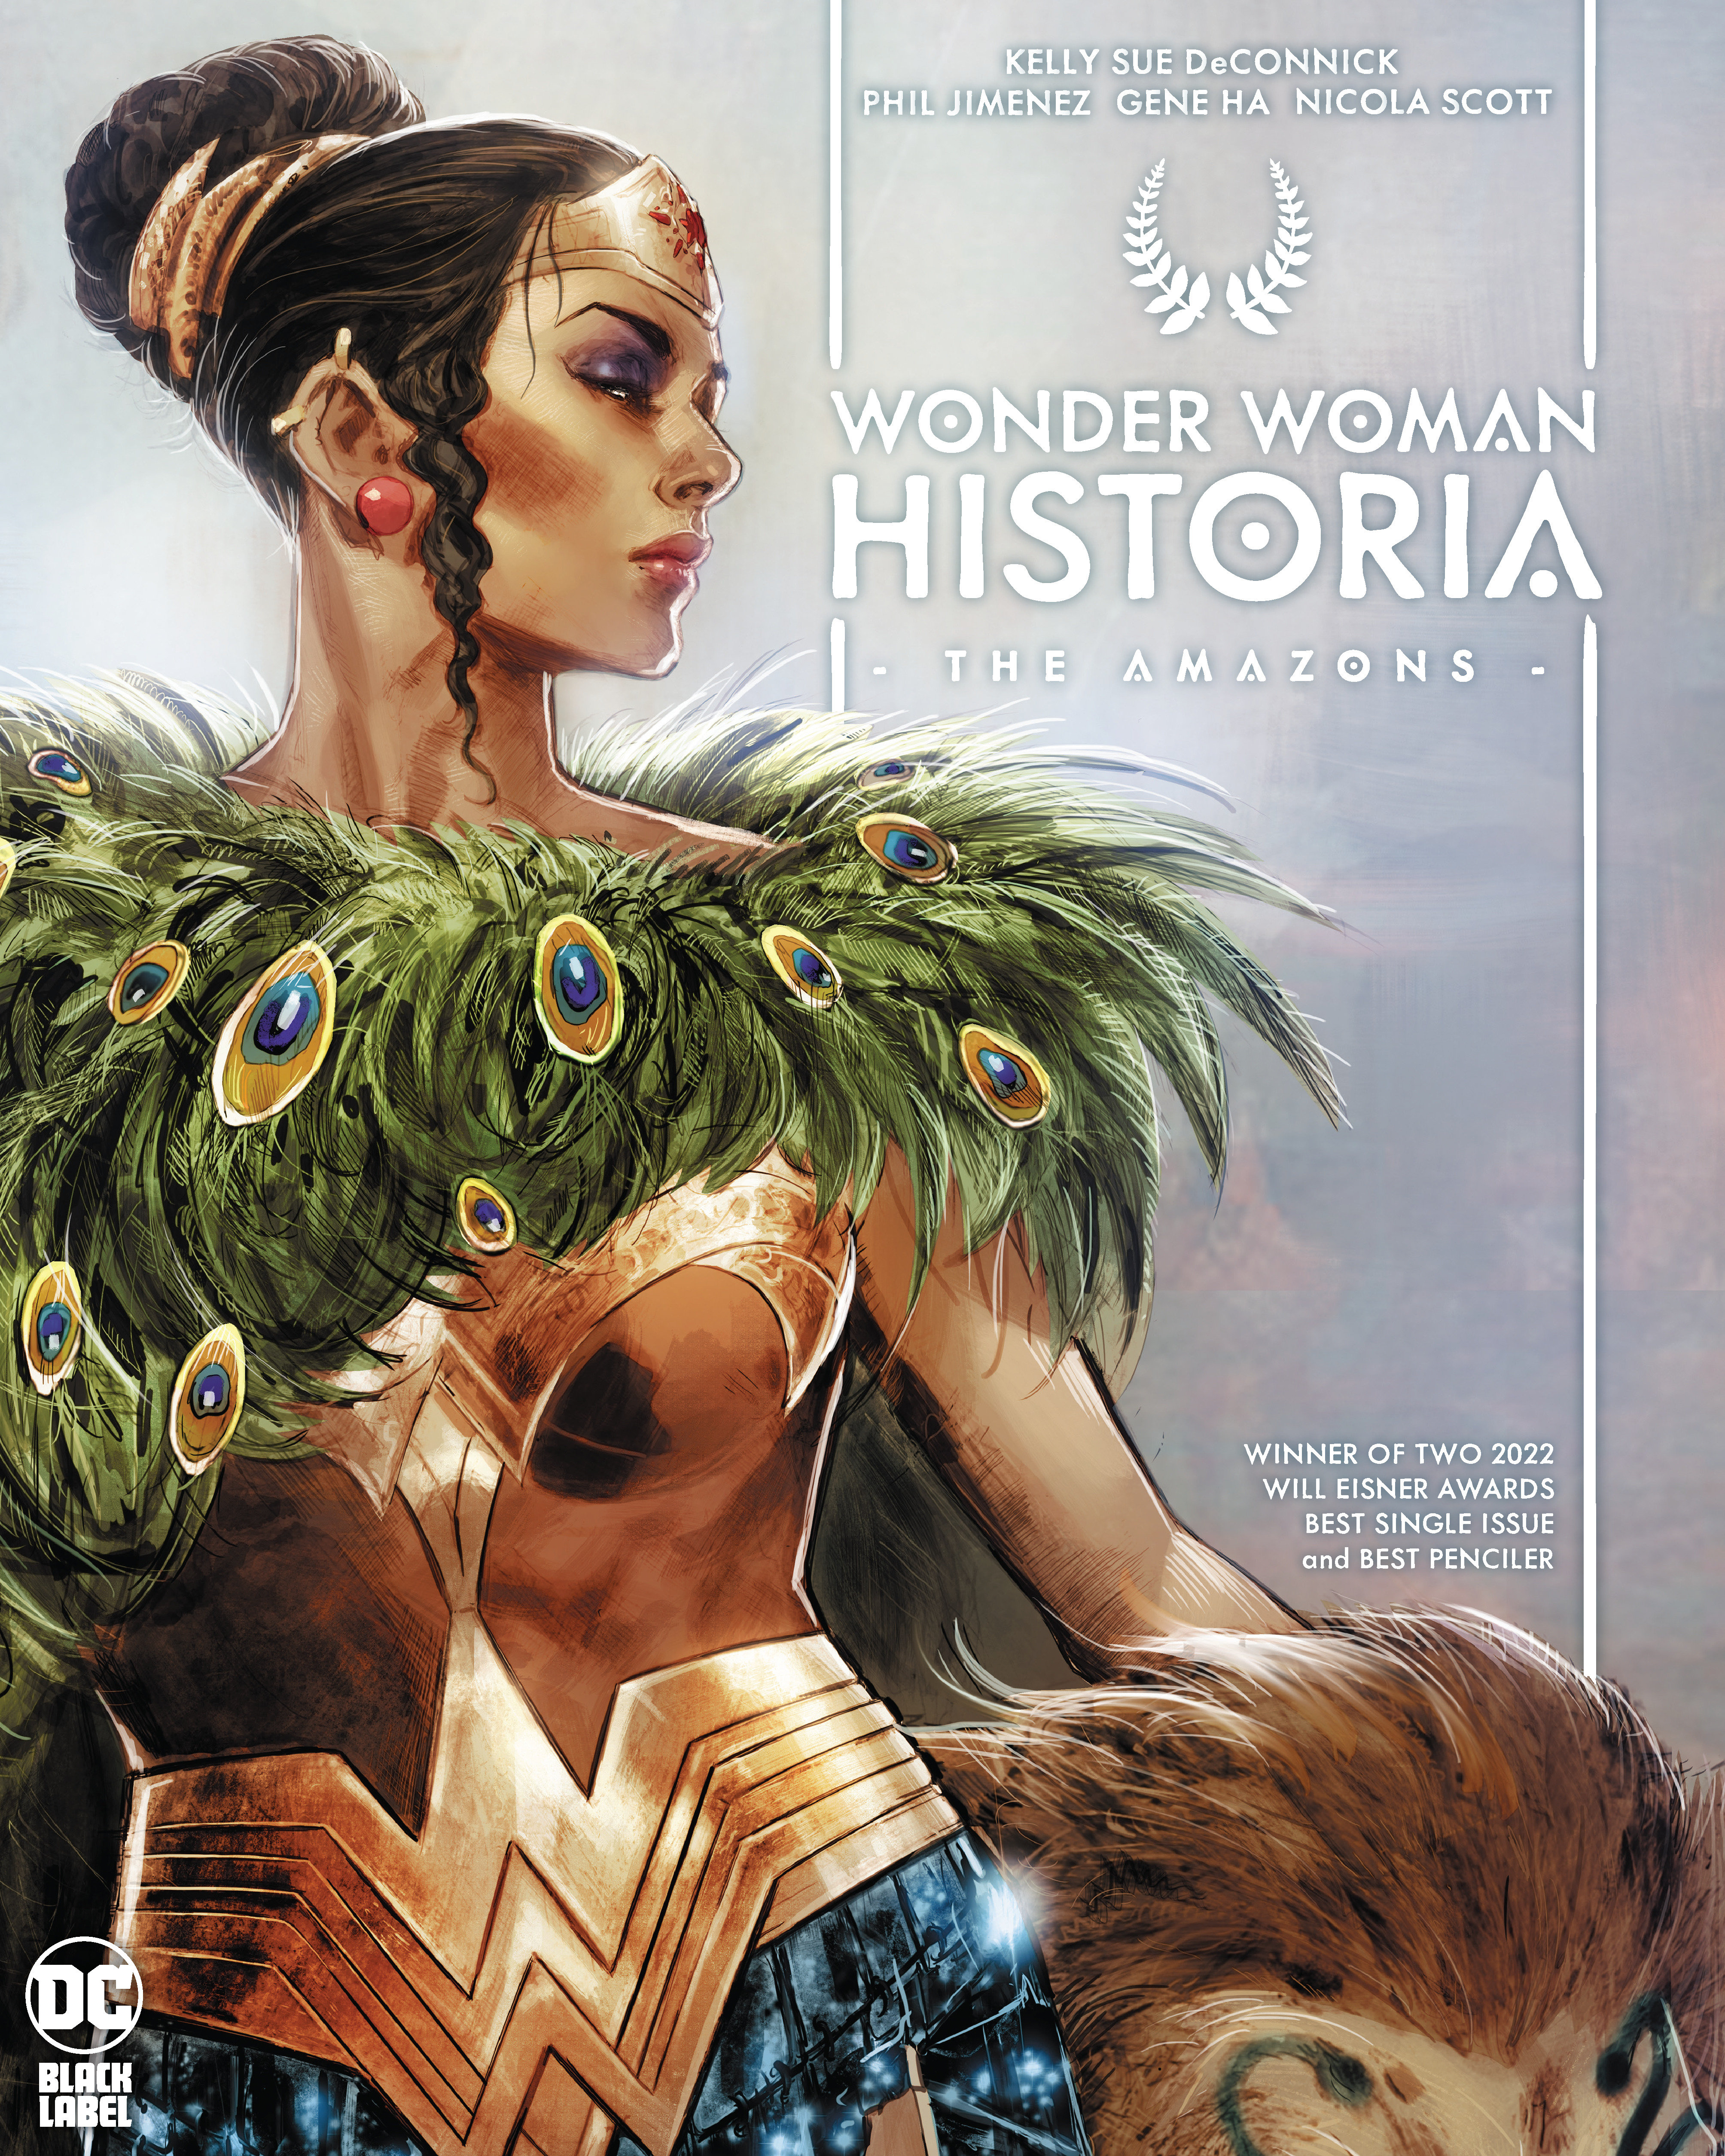 Wonder Woman Historia the Amazons Hardcover